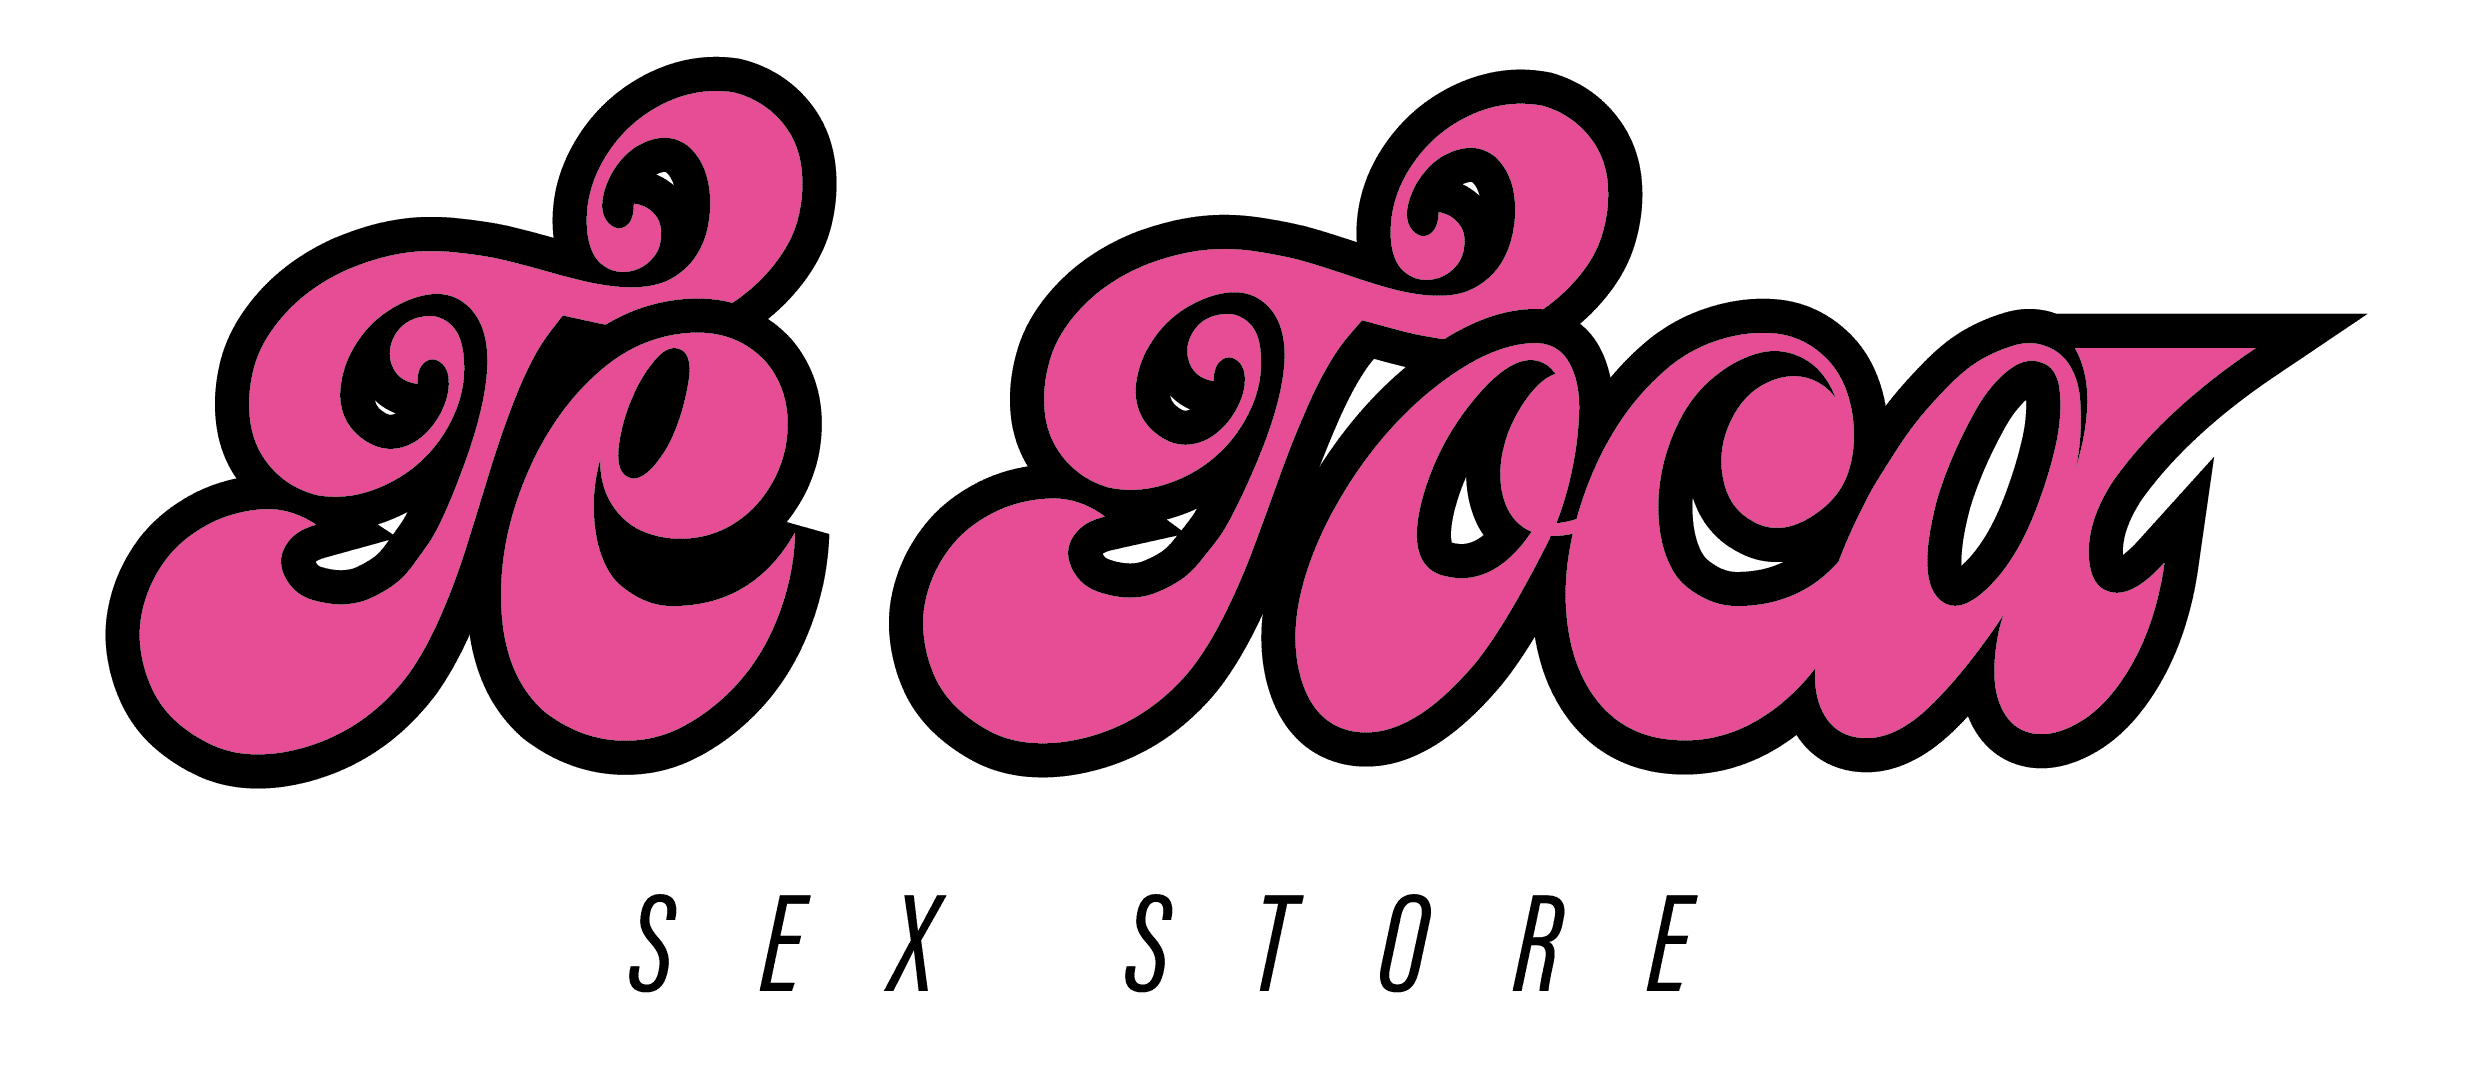 Te Toca Sex Store